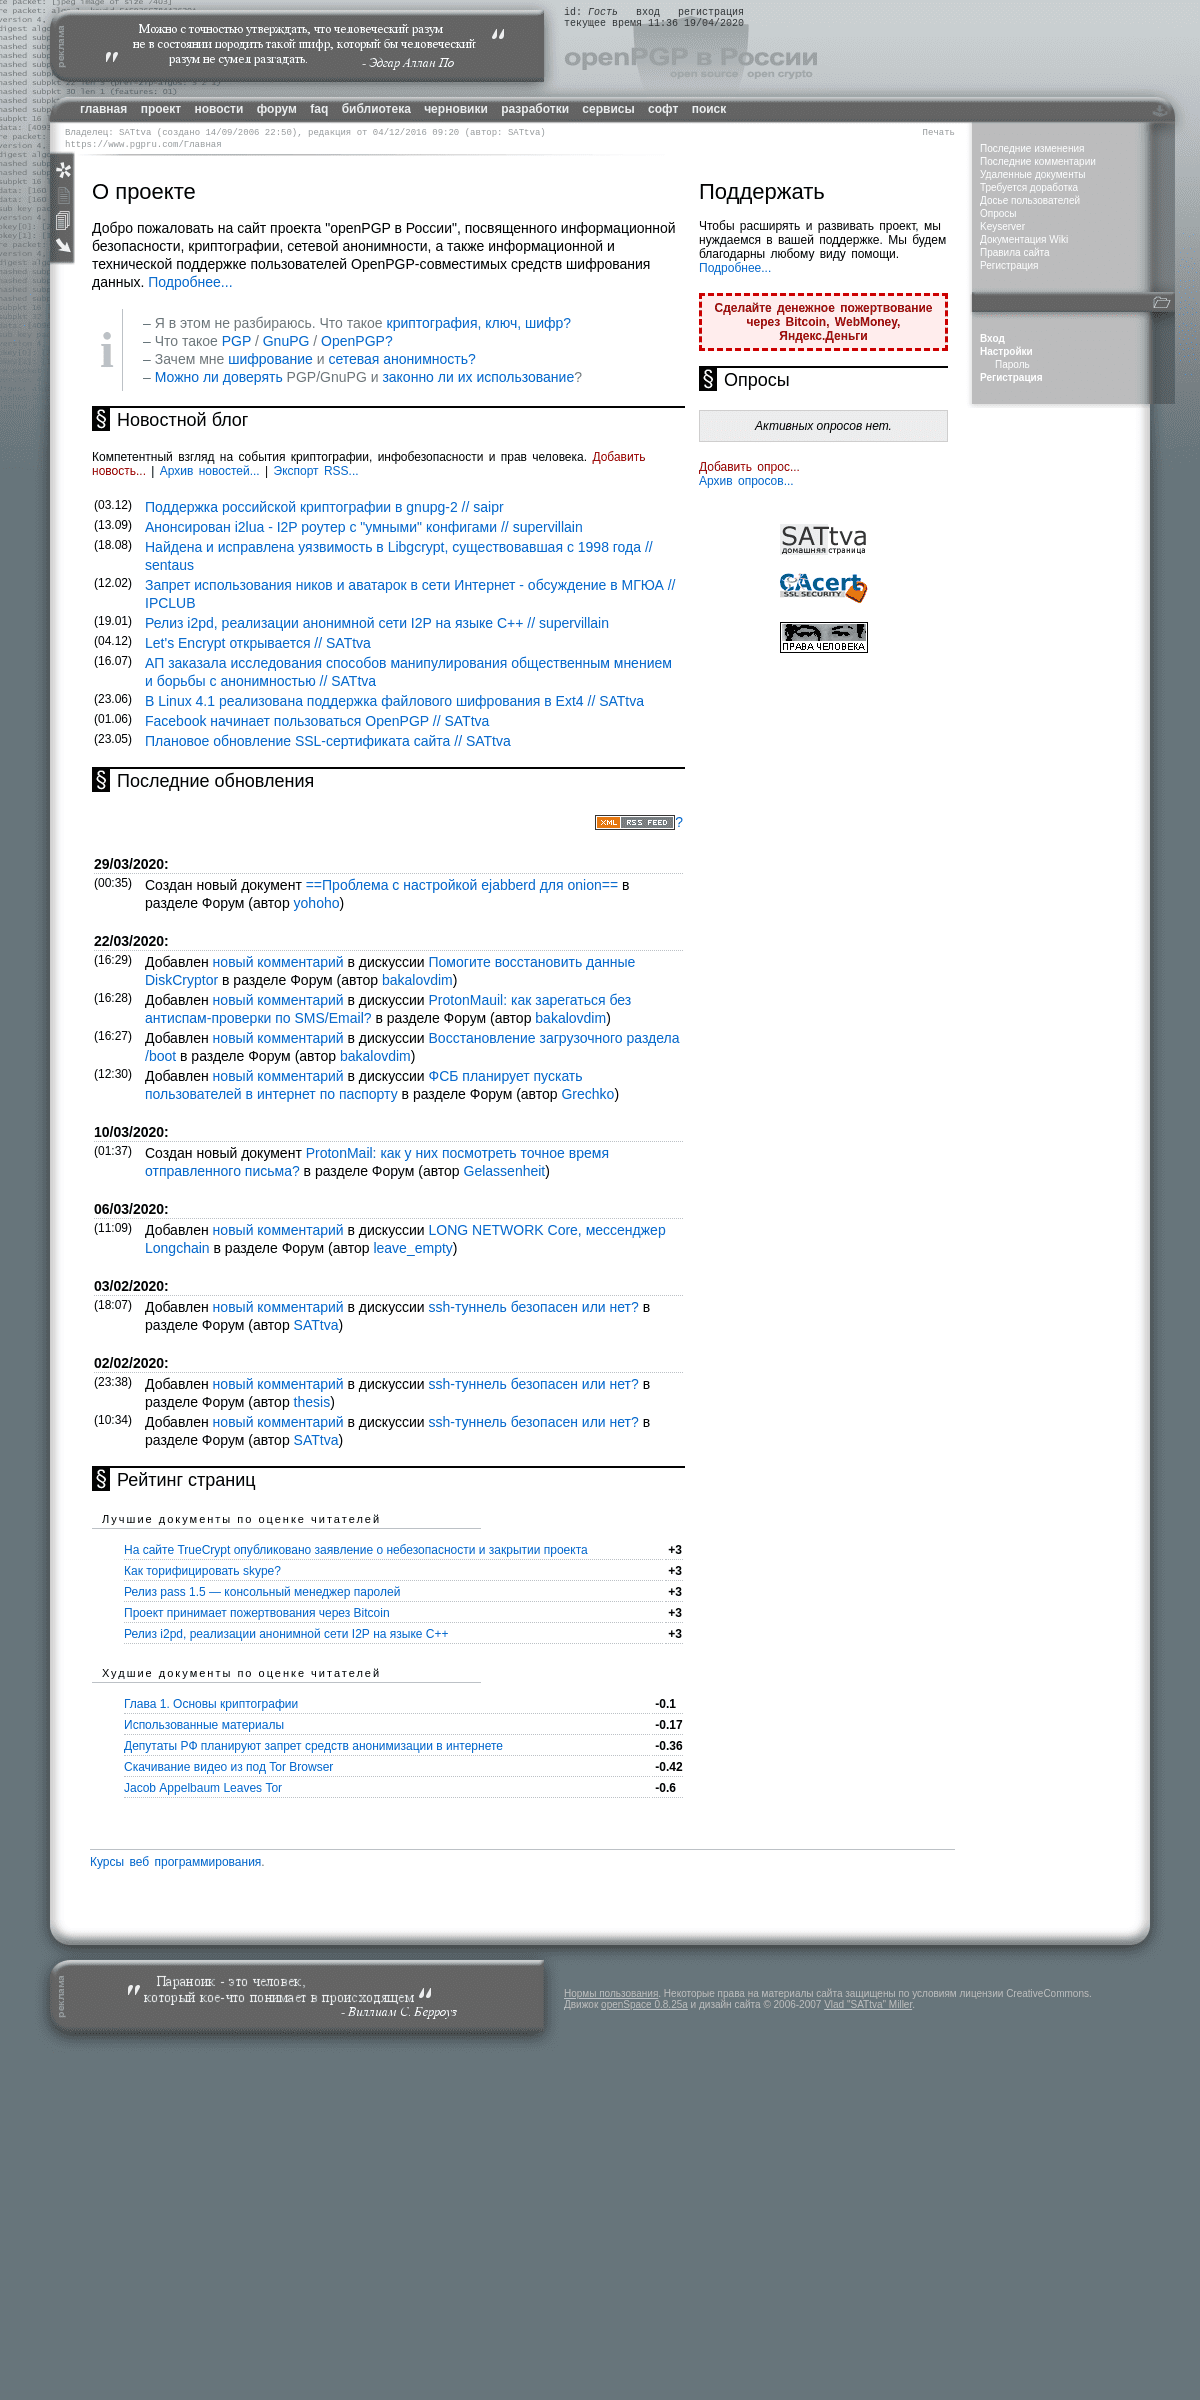 A complete backup of pgpru.com